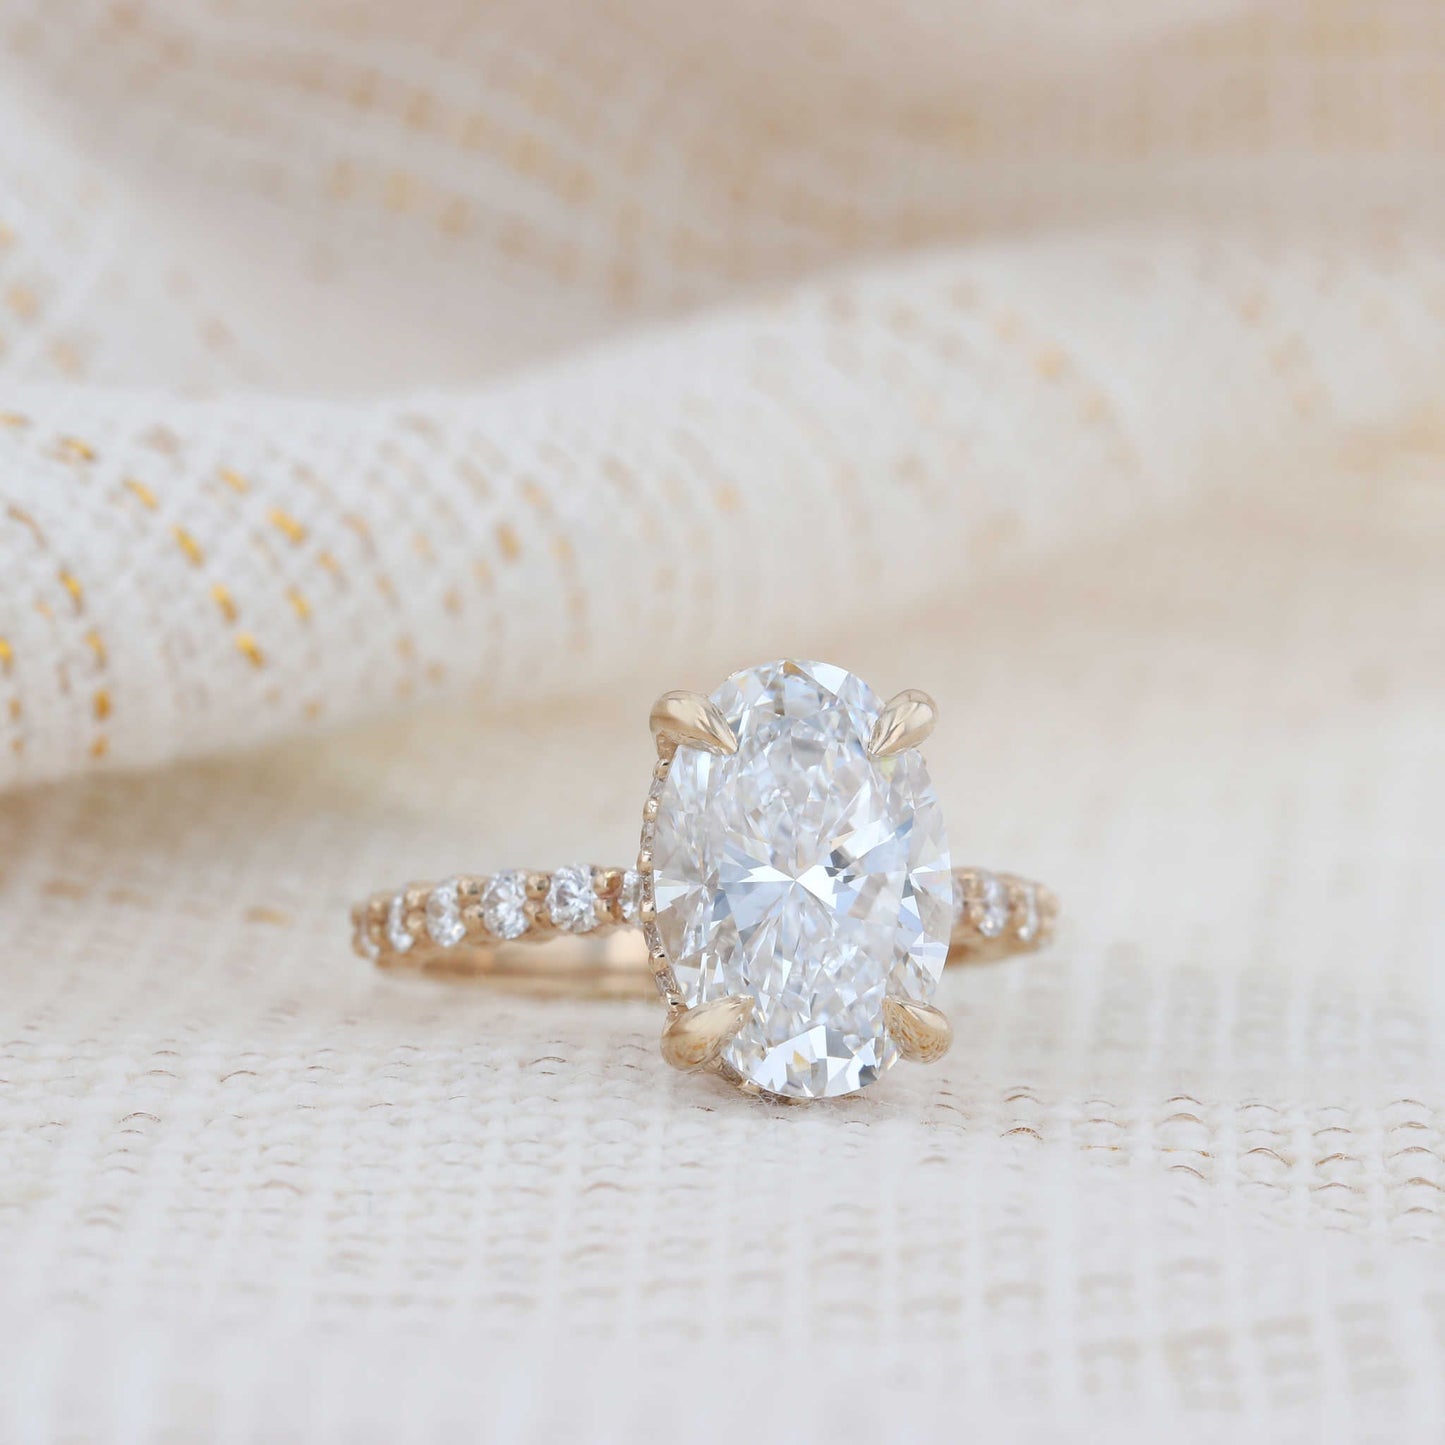 Hidden Halo Oval Diamond Engagement Ring on Fabric